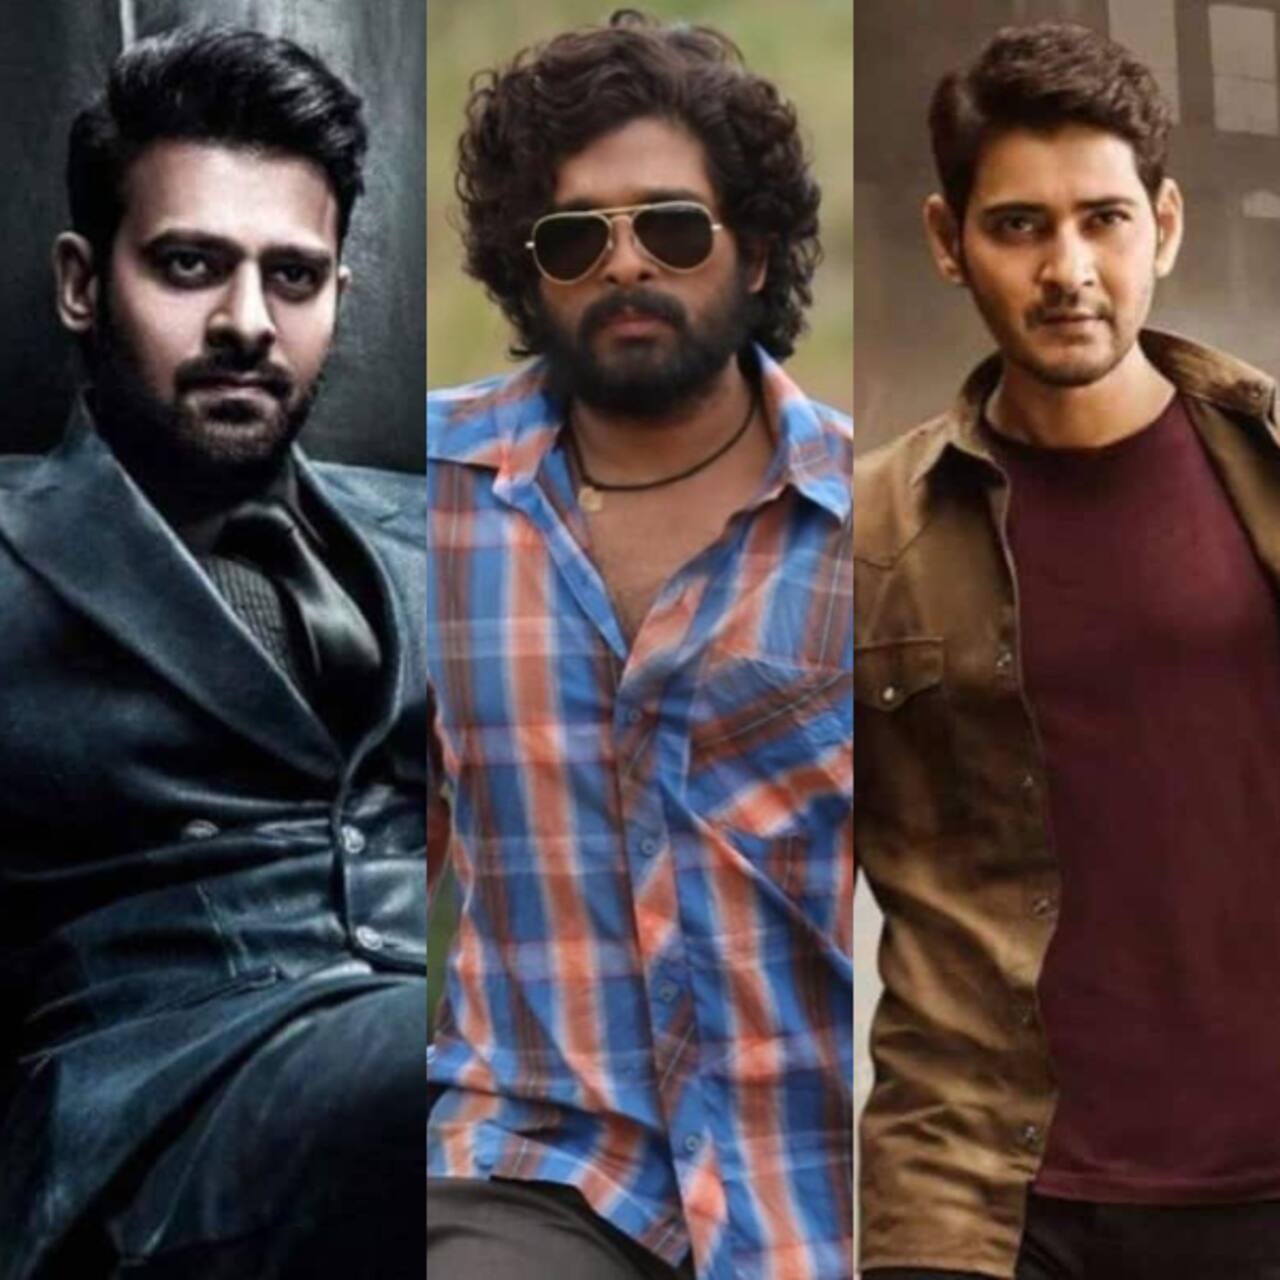 Mahesh Babu's SSMB28, Prabhas' Salaar, Allu Arjun's Pushpa 2 and more Telugu new movie shoots to again be HALTED? Here's what we know